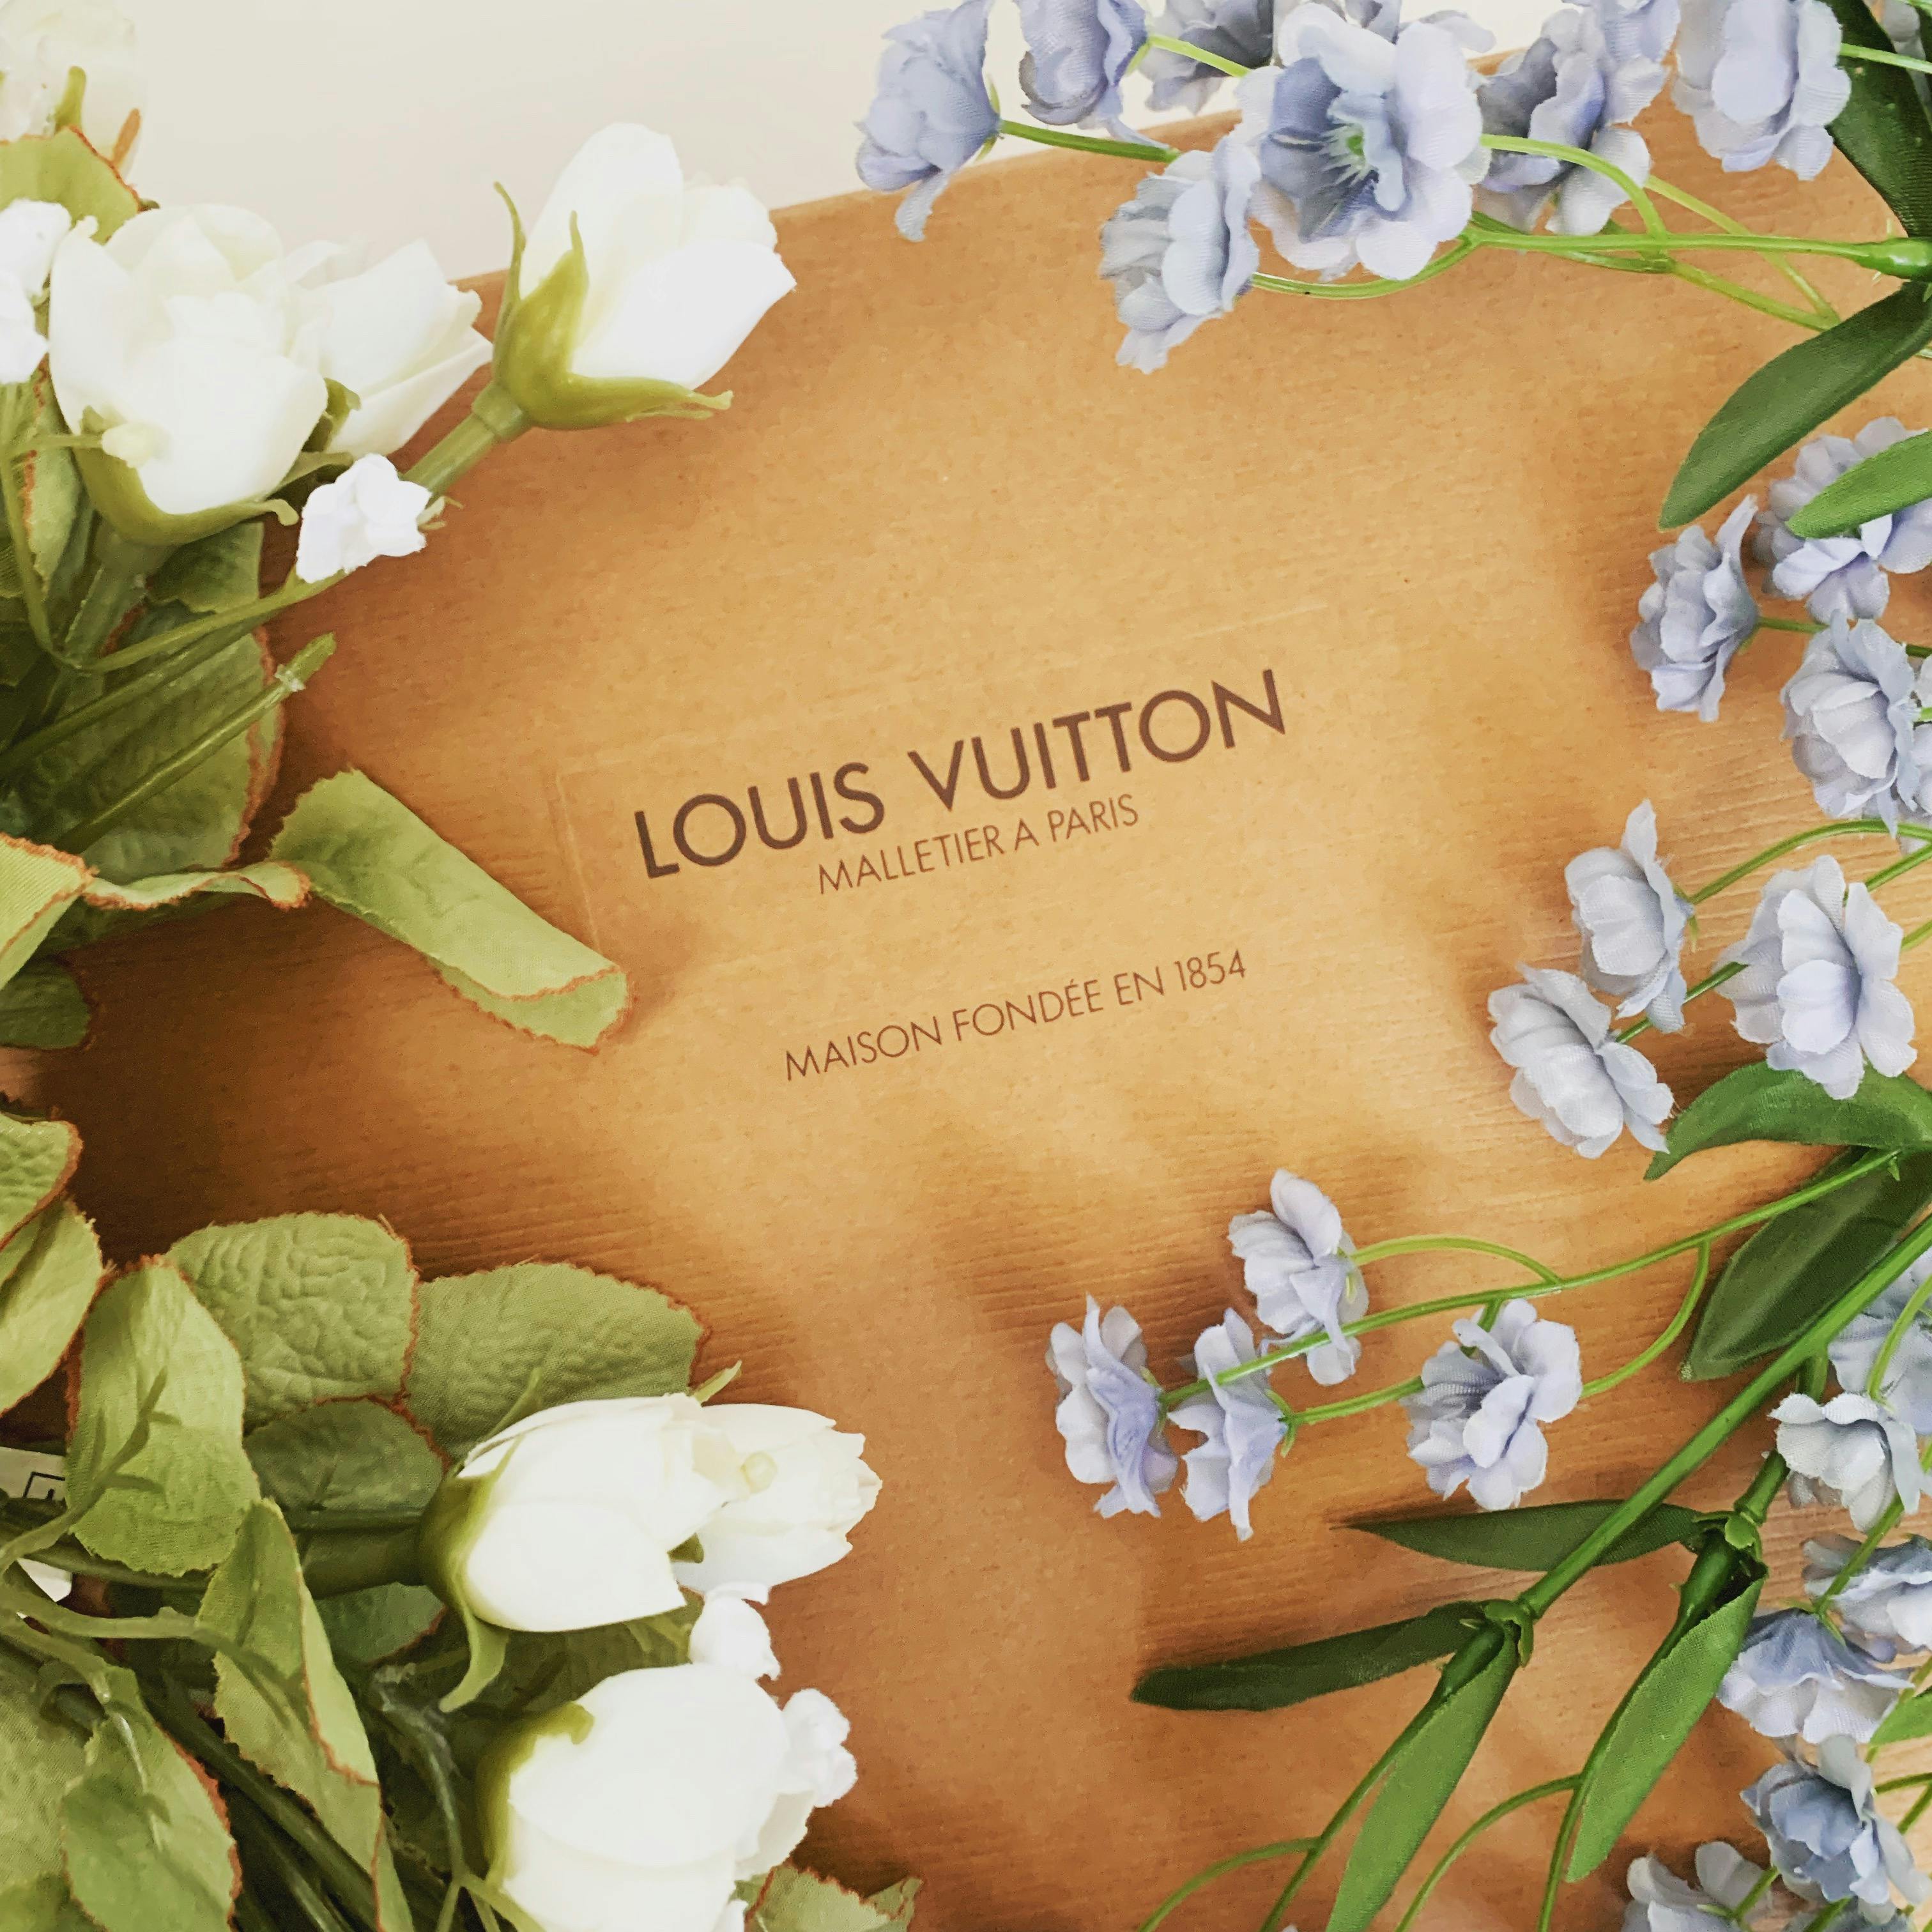 A Louis Vuitton Box near the Flowers · Free Stock Photo